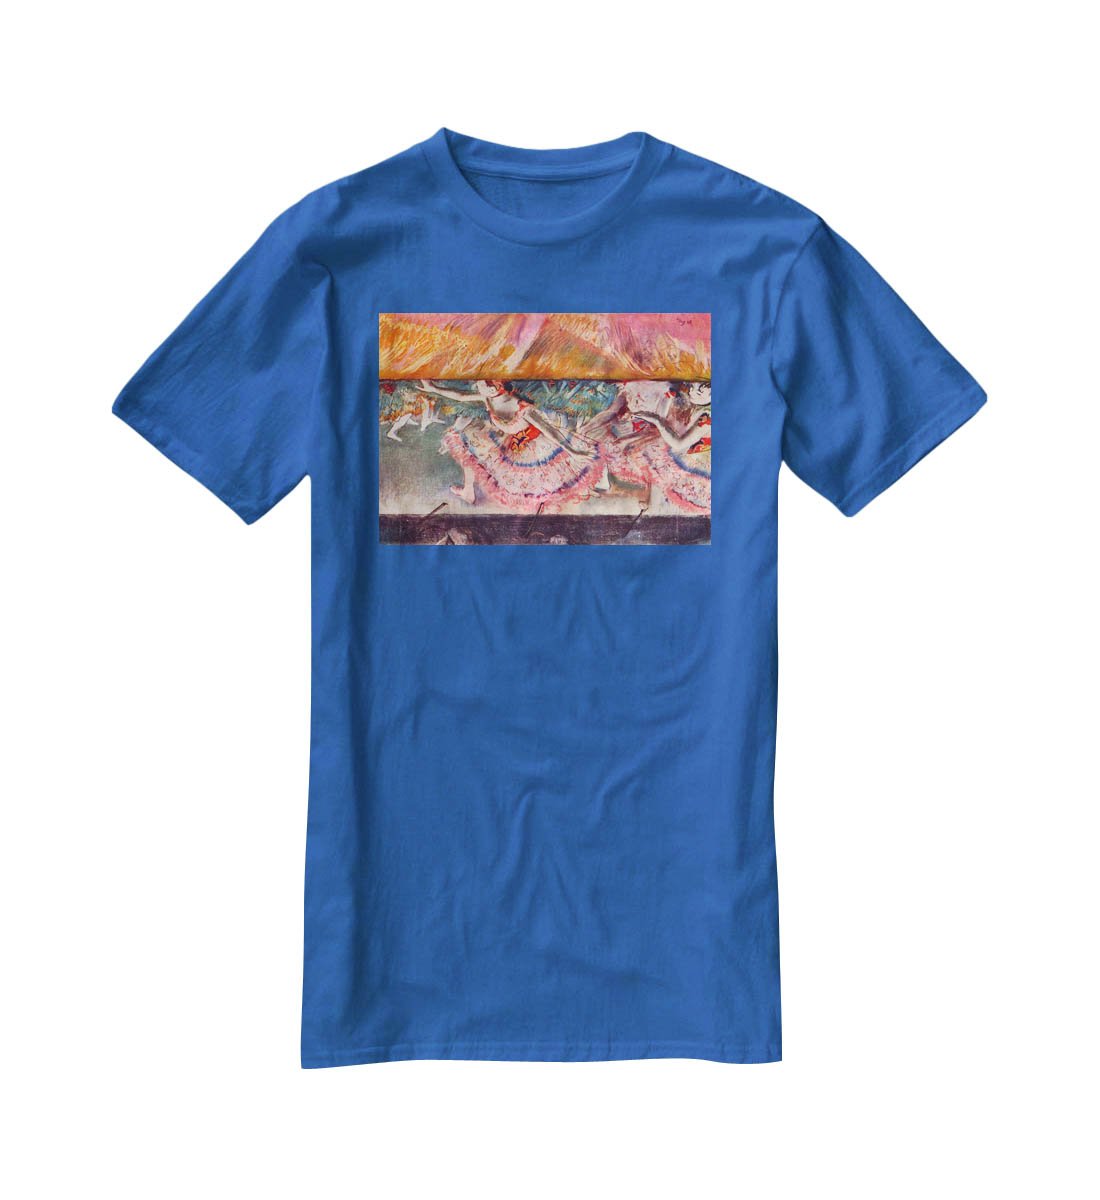 The curtain falls by Degas T-Shirt - Canvas Art Rocks - 2